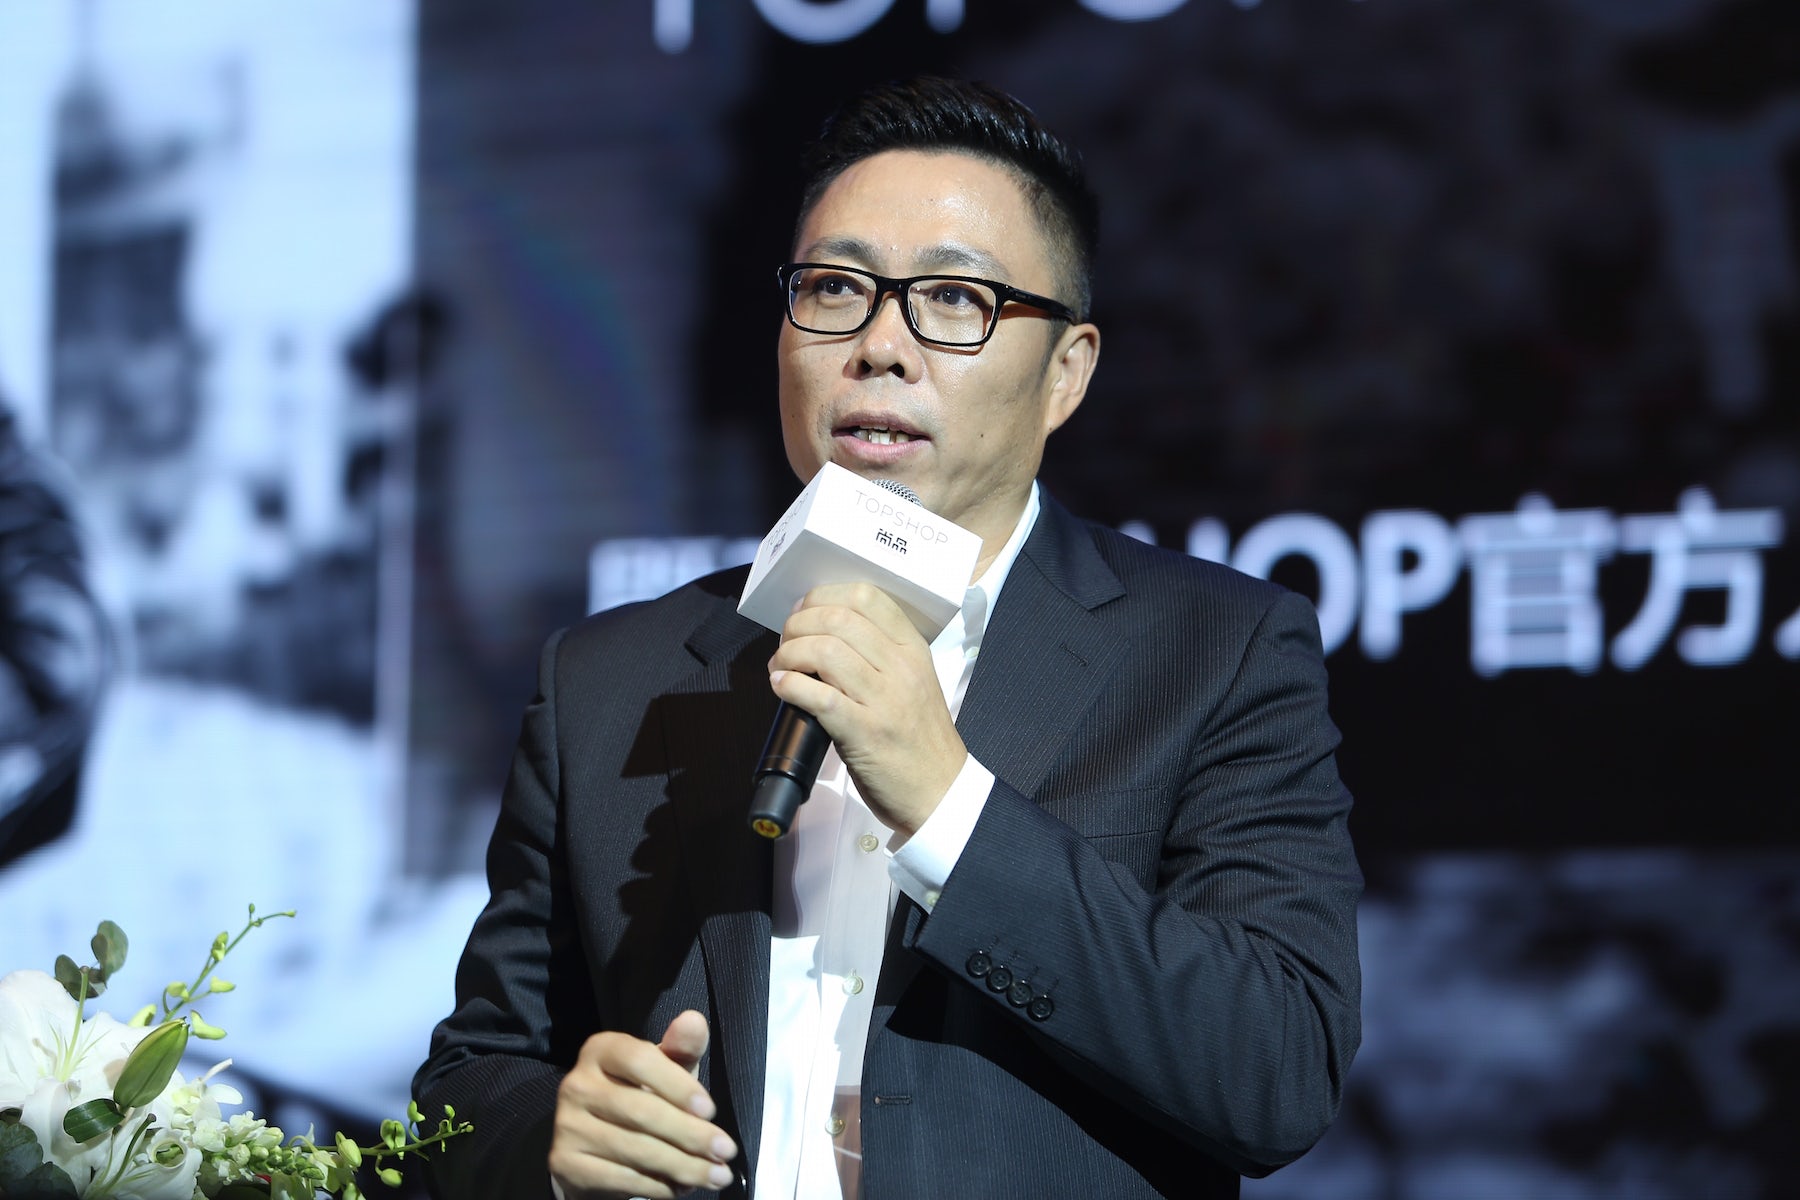 Alibaba's Koala Haigou Launches Luxury Channel